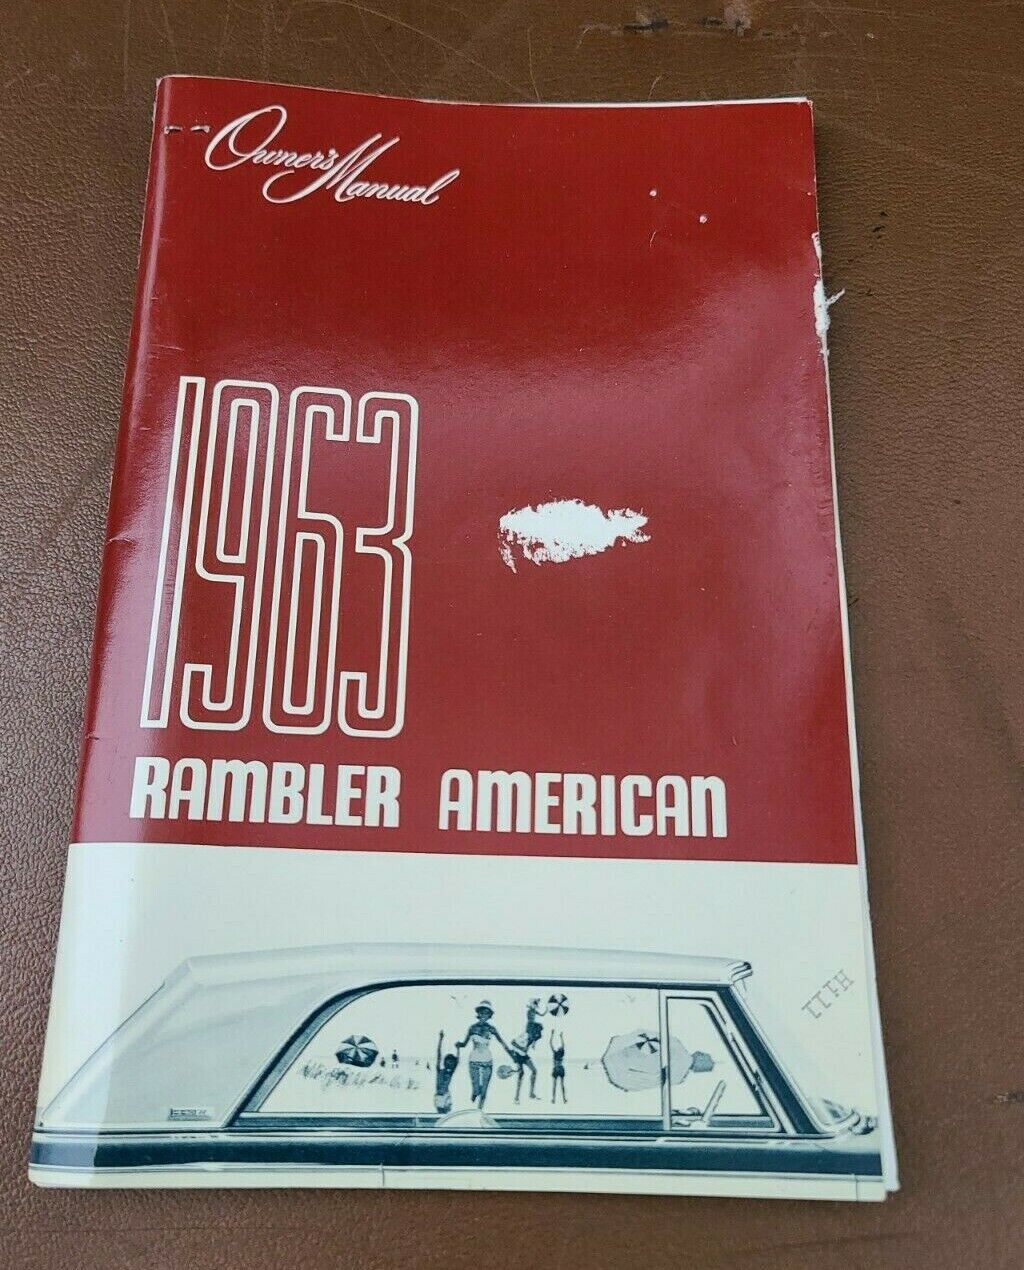 Outlet sale feature 1963 AMC AMERICAN MOTORS OPERATORS FACTORY Many popular brands RAMBLER OWNE